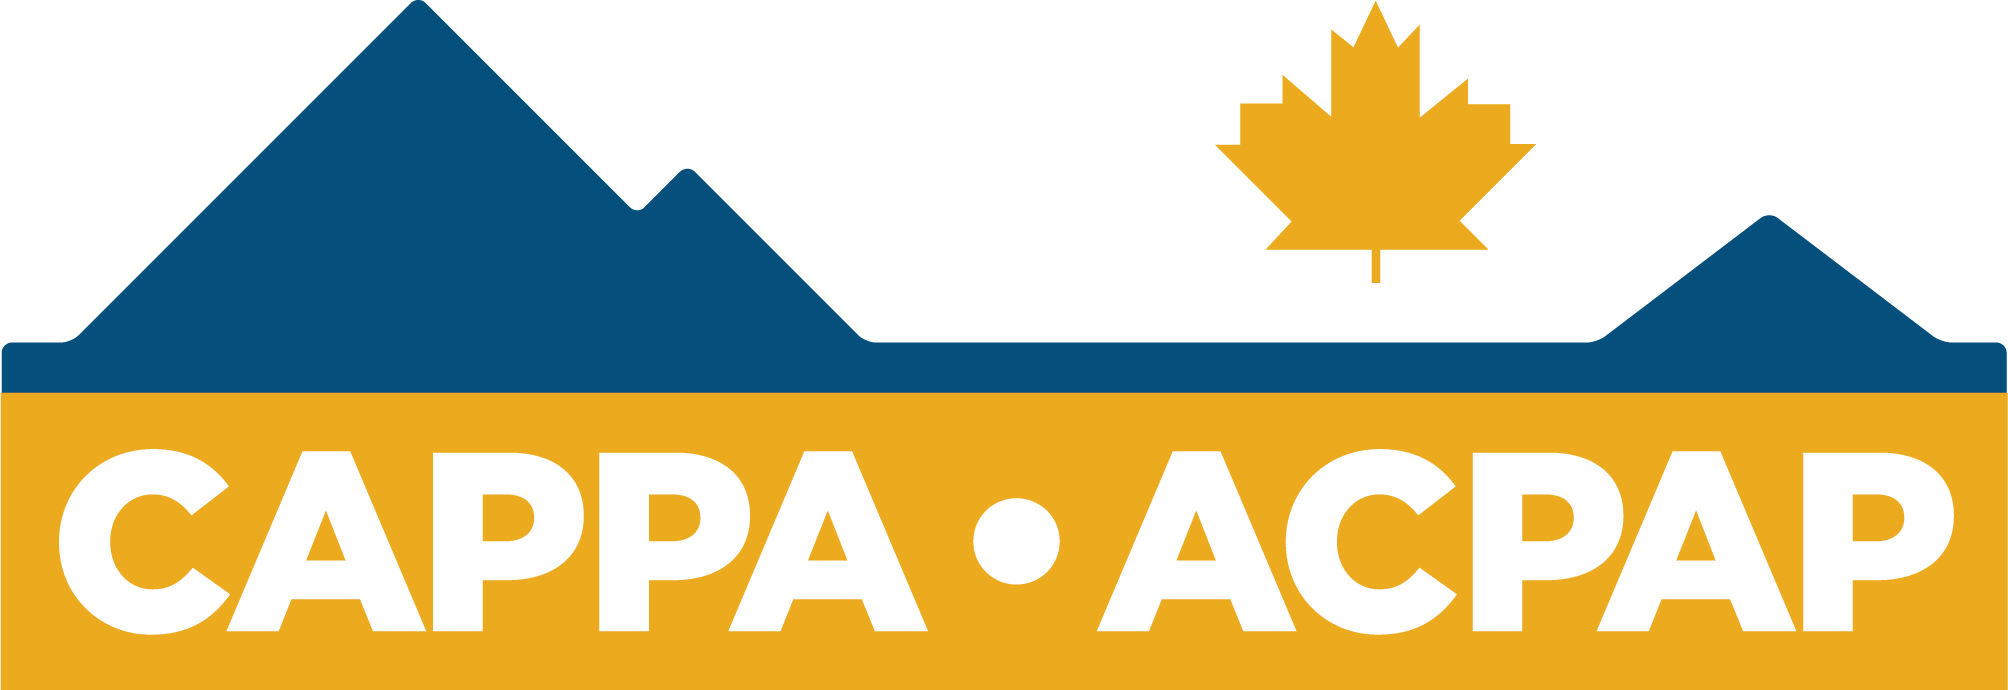 CAPPA-ACPAP Logo horizontal